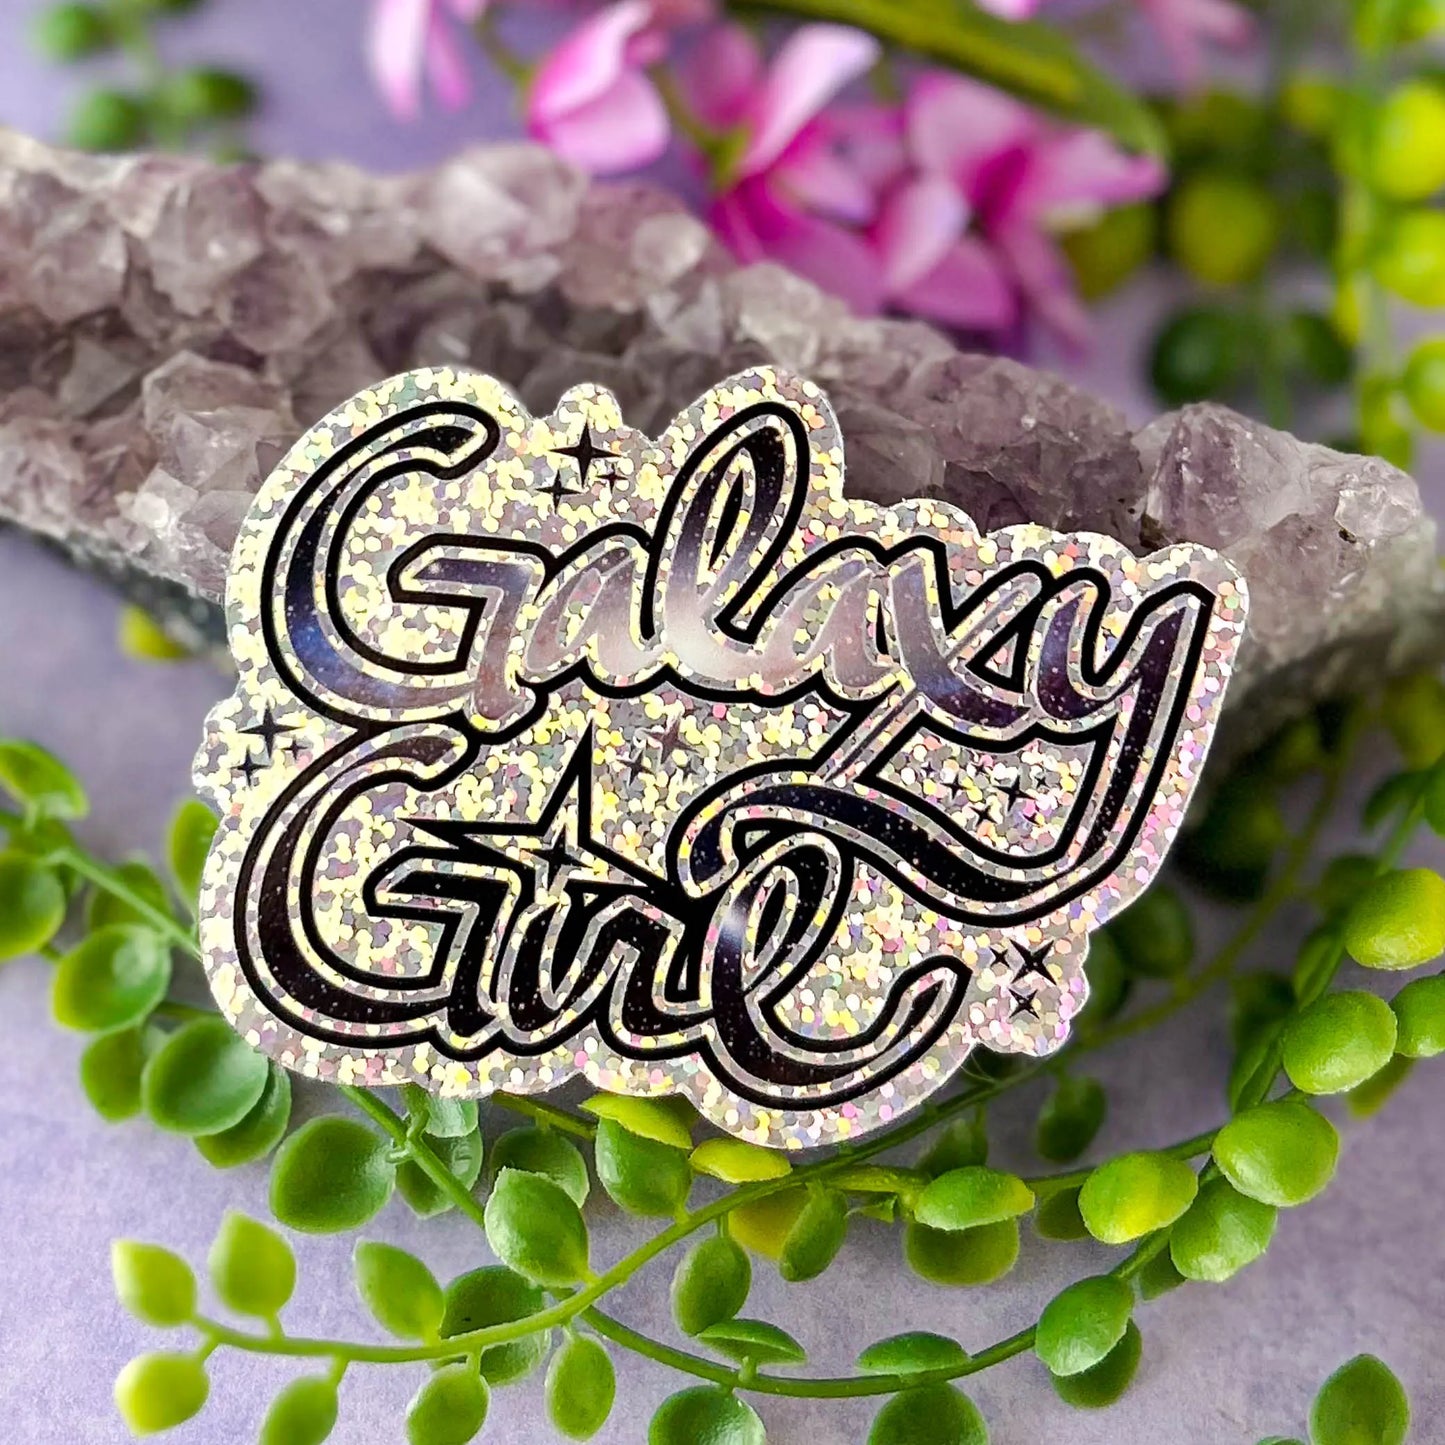 Galaxy Girl Die-Cut Sparkle 3" Vinyl Sticker against amethyst rock with greenery